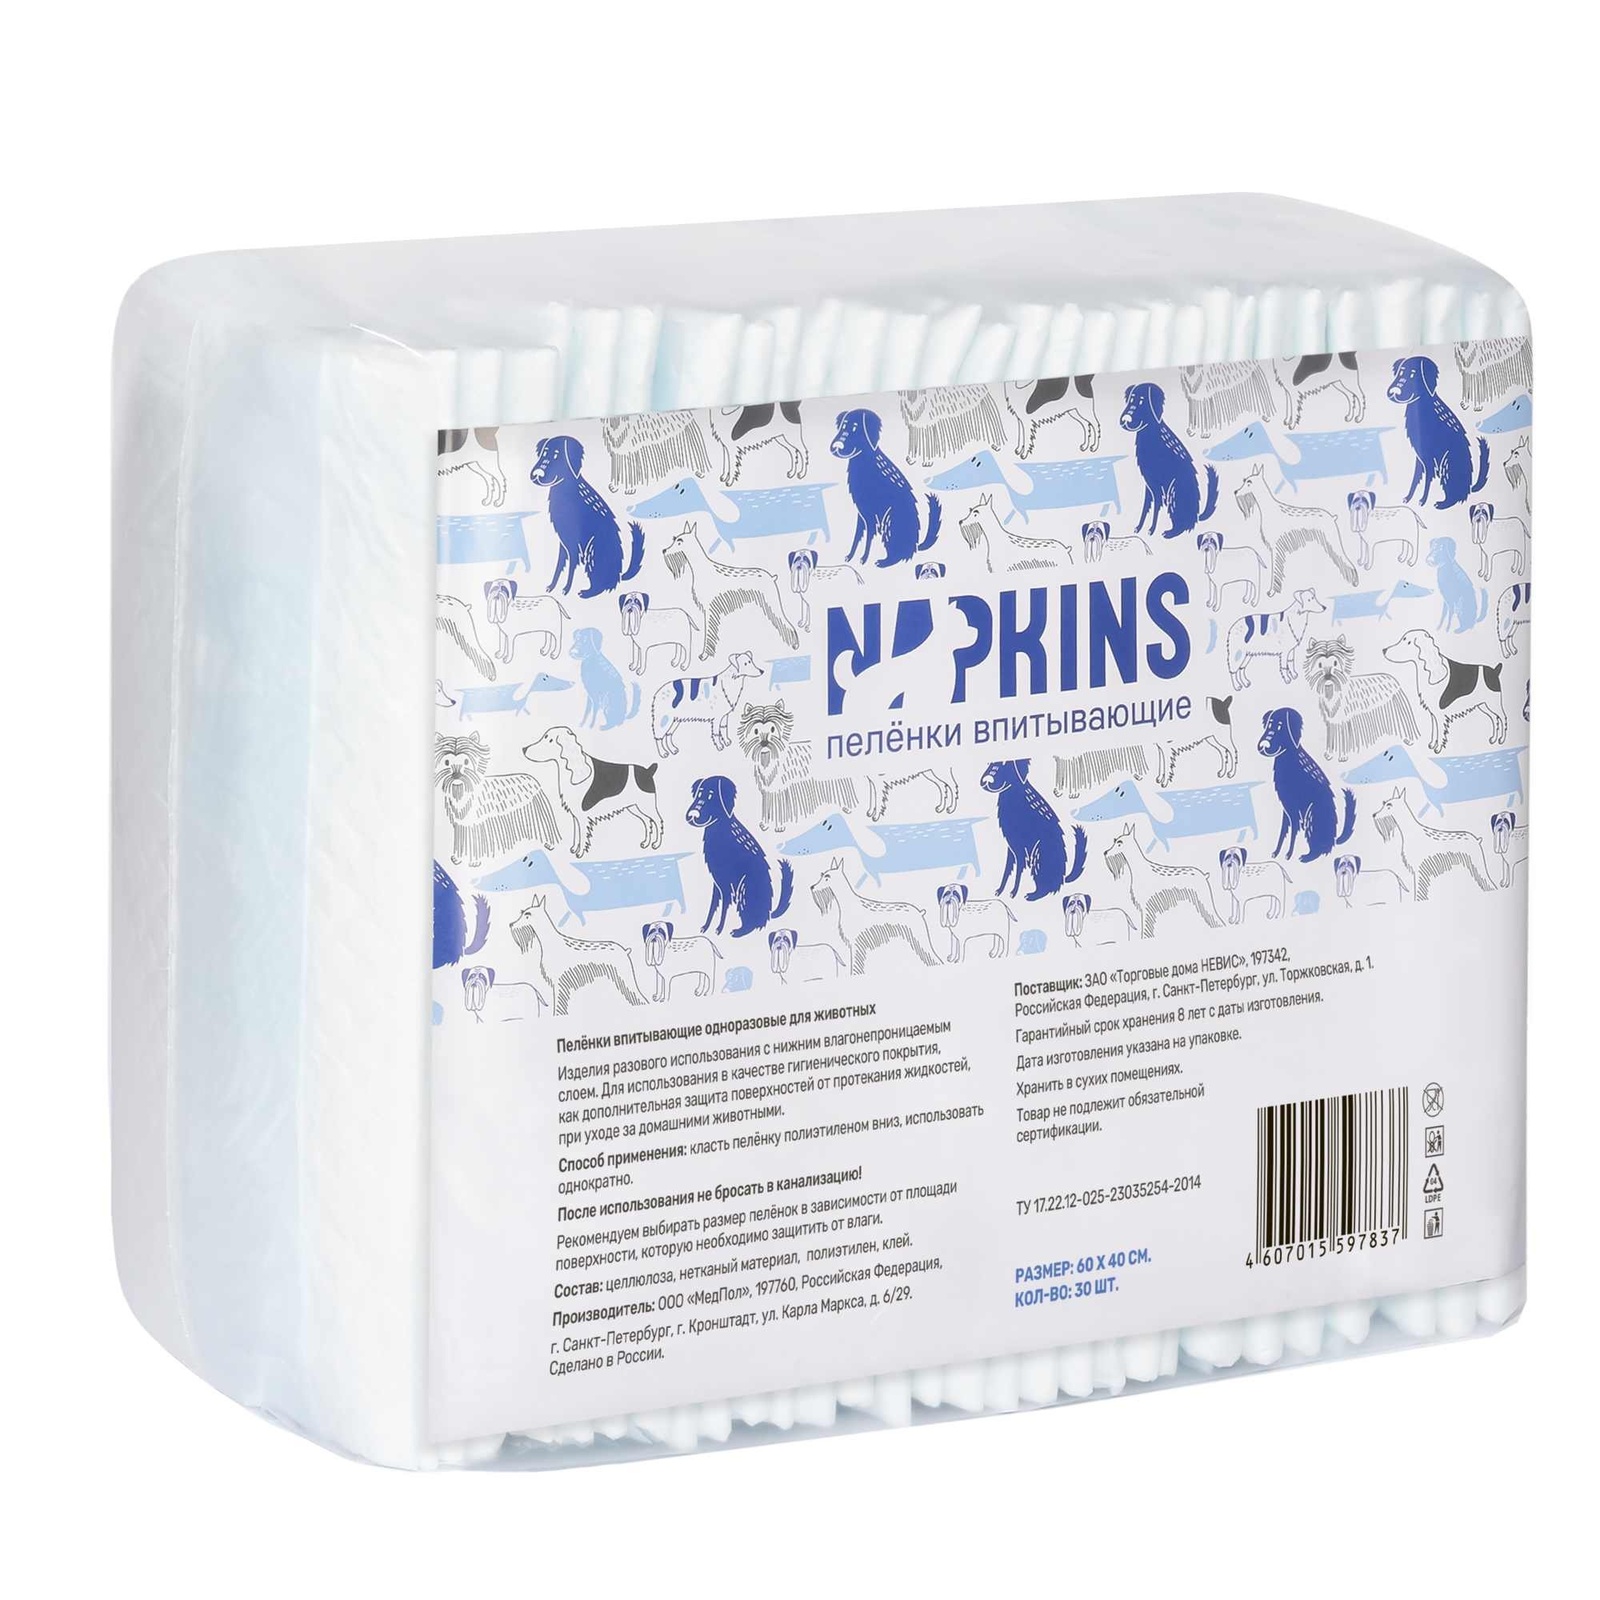 NAPKINS NAPKINS впитывающие пелёнки с целлюлозой для собак 60х40 (300 г) napkins napkins гелевые пелёнки для собак 60х60 300 г